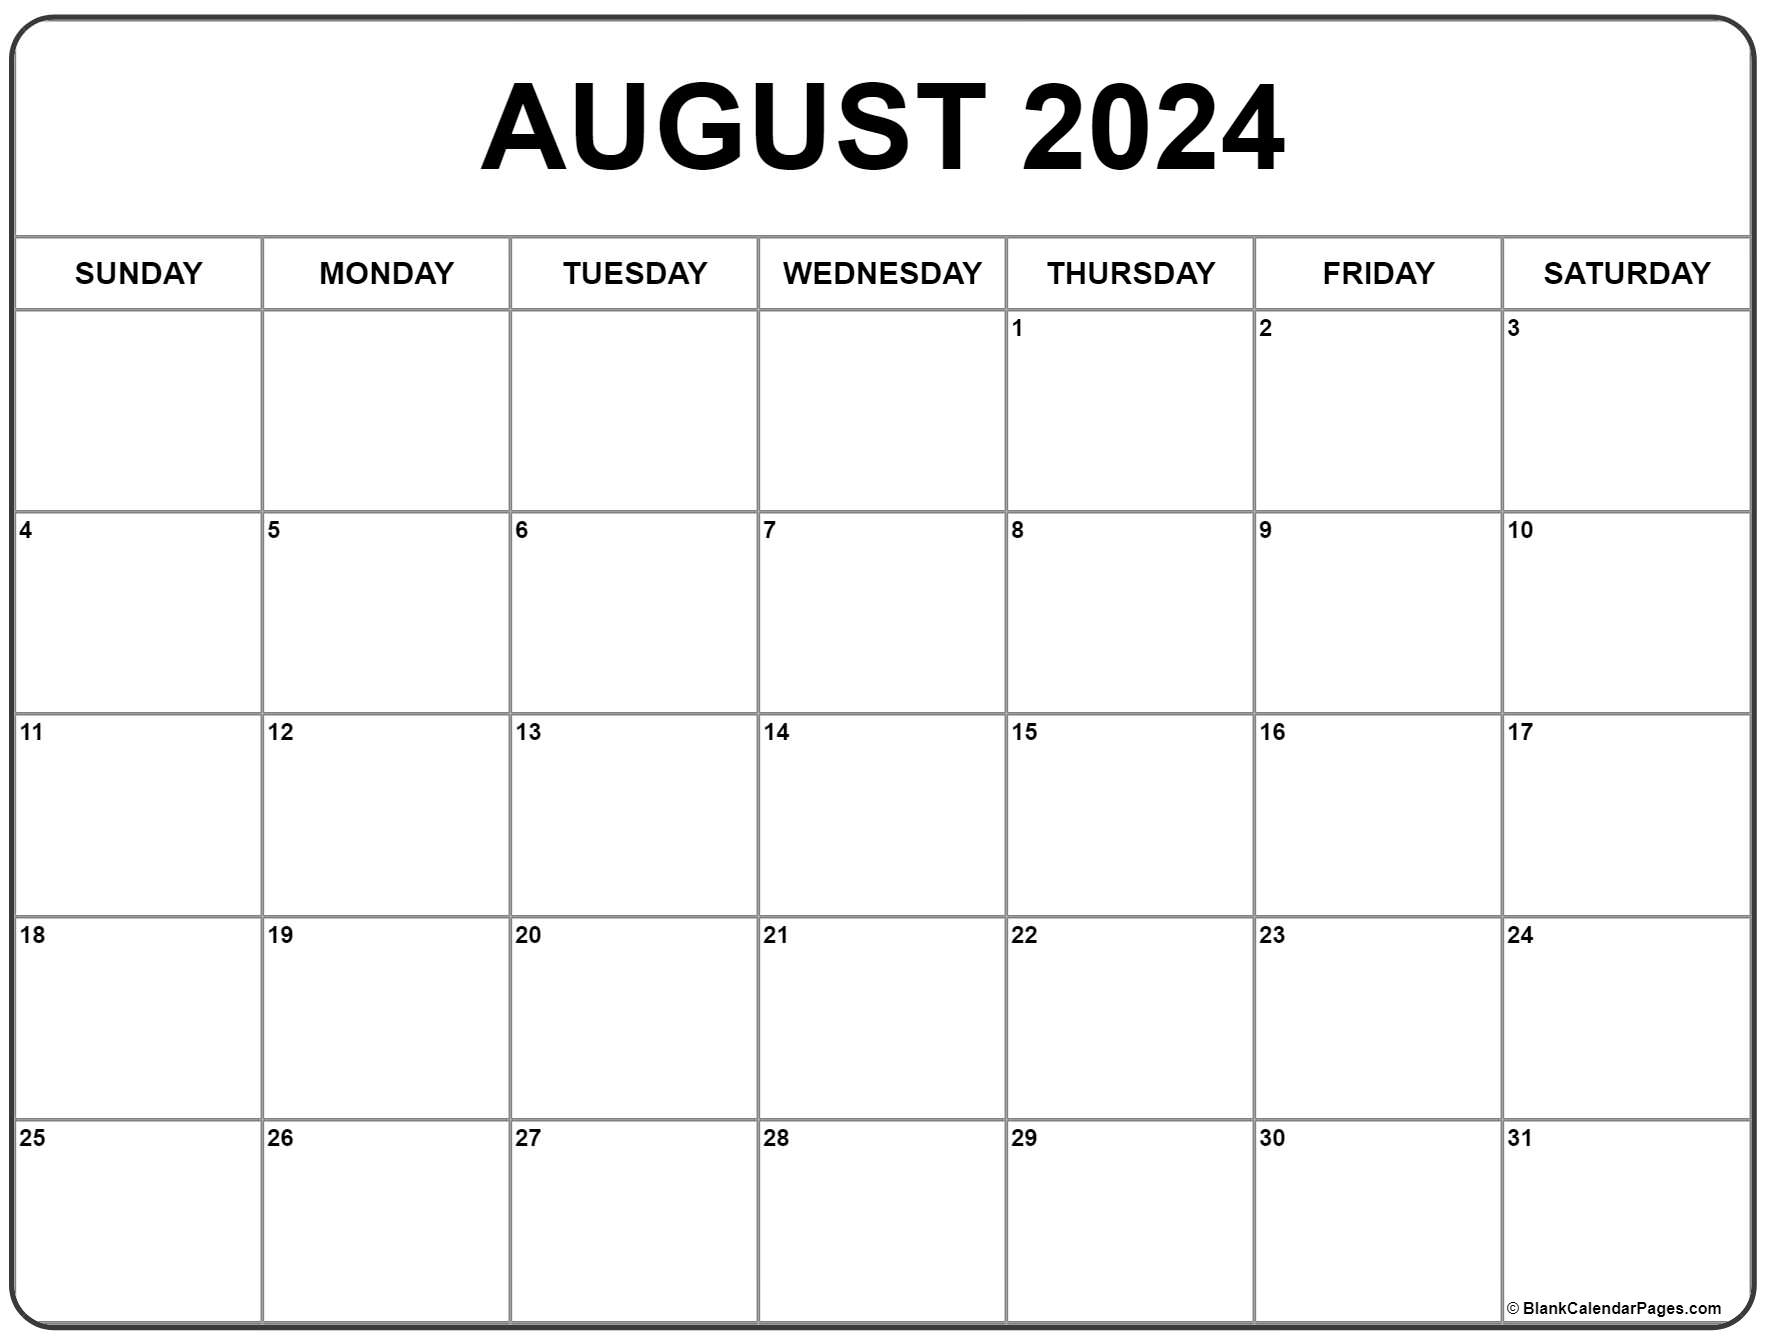 August 2024 Calendar | Free Printable Calendar intended for Free Printable August 2024 Calender